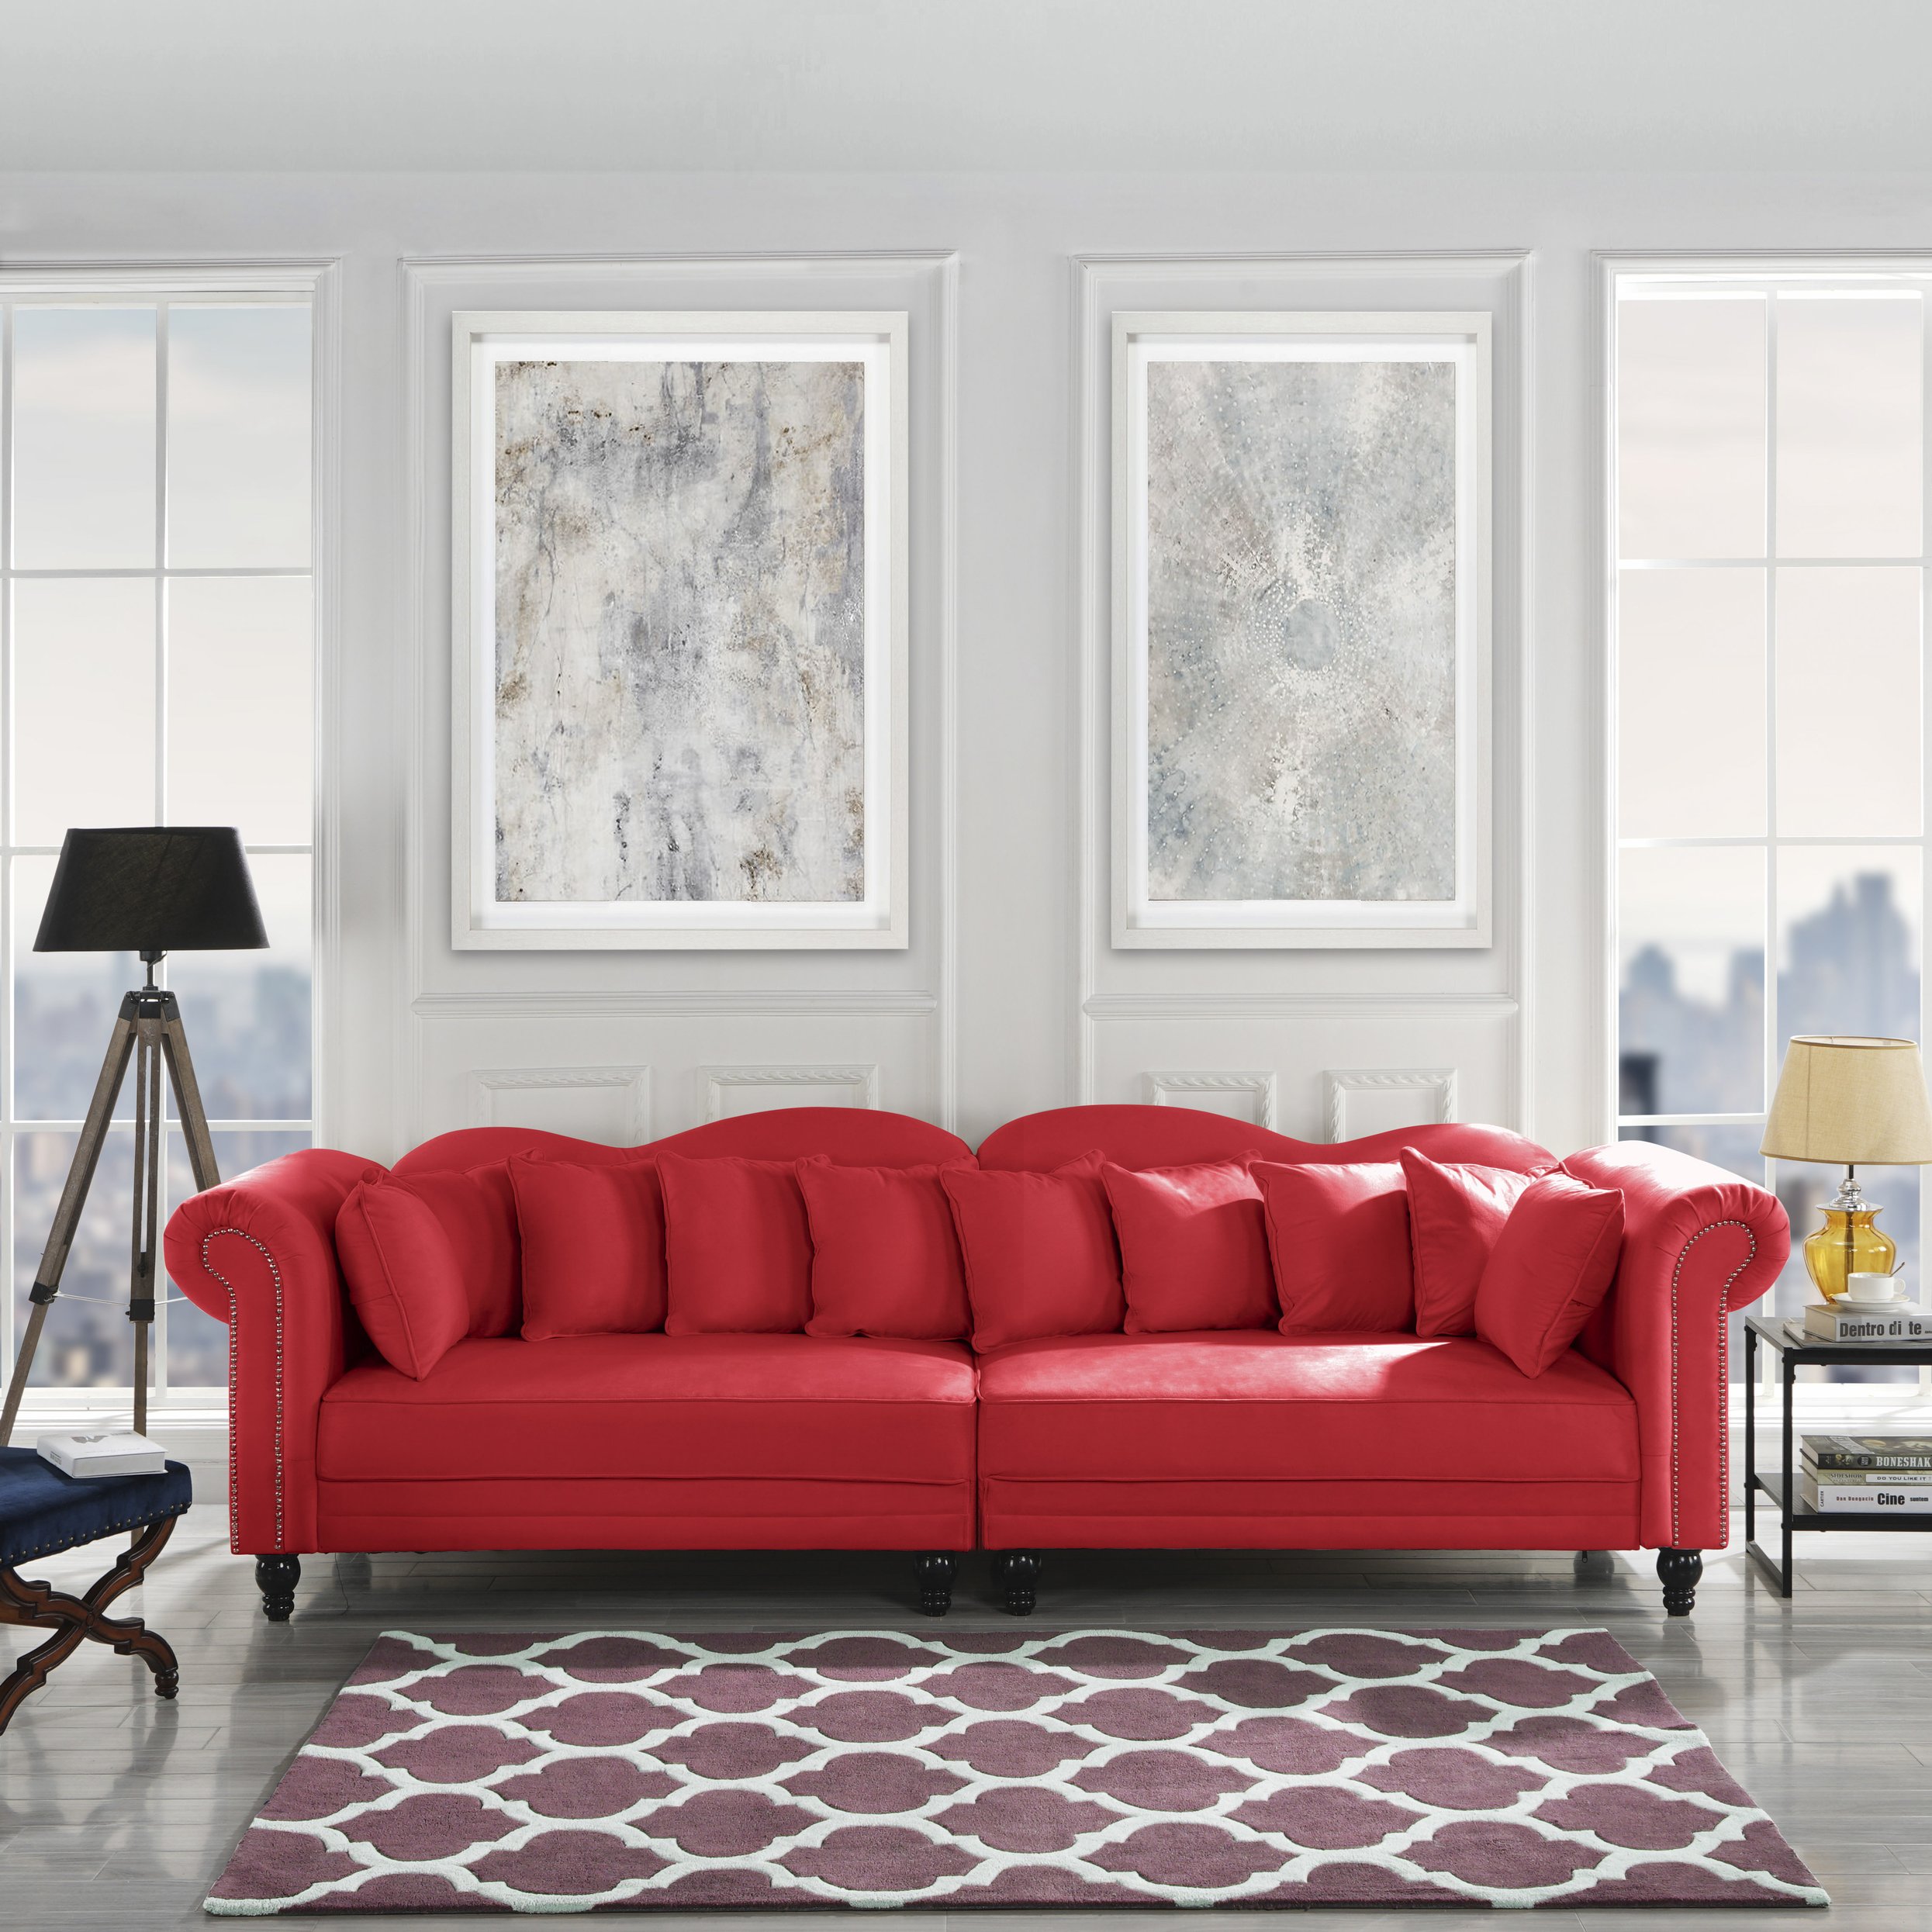 Chesterfield Large Living Room Sofa, Classic Velvet Upholstered Couch